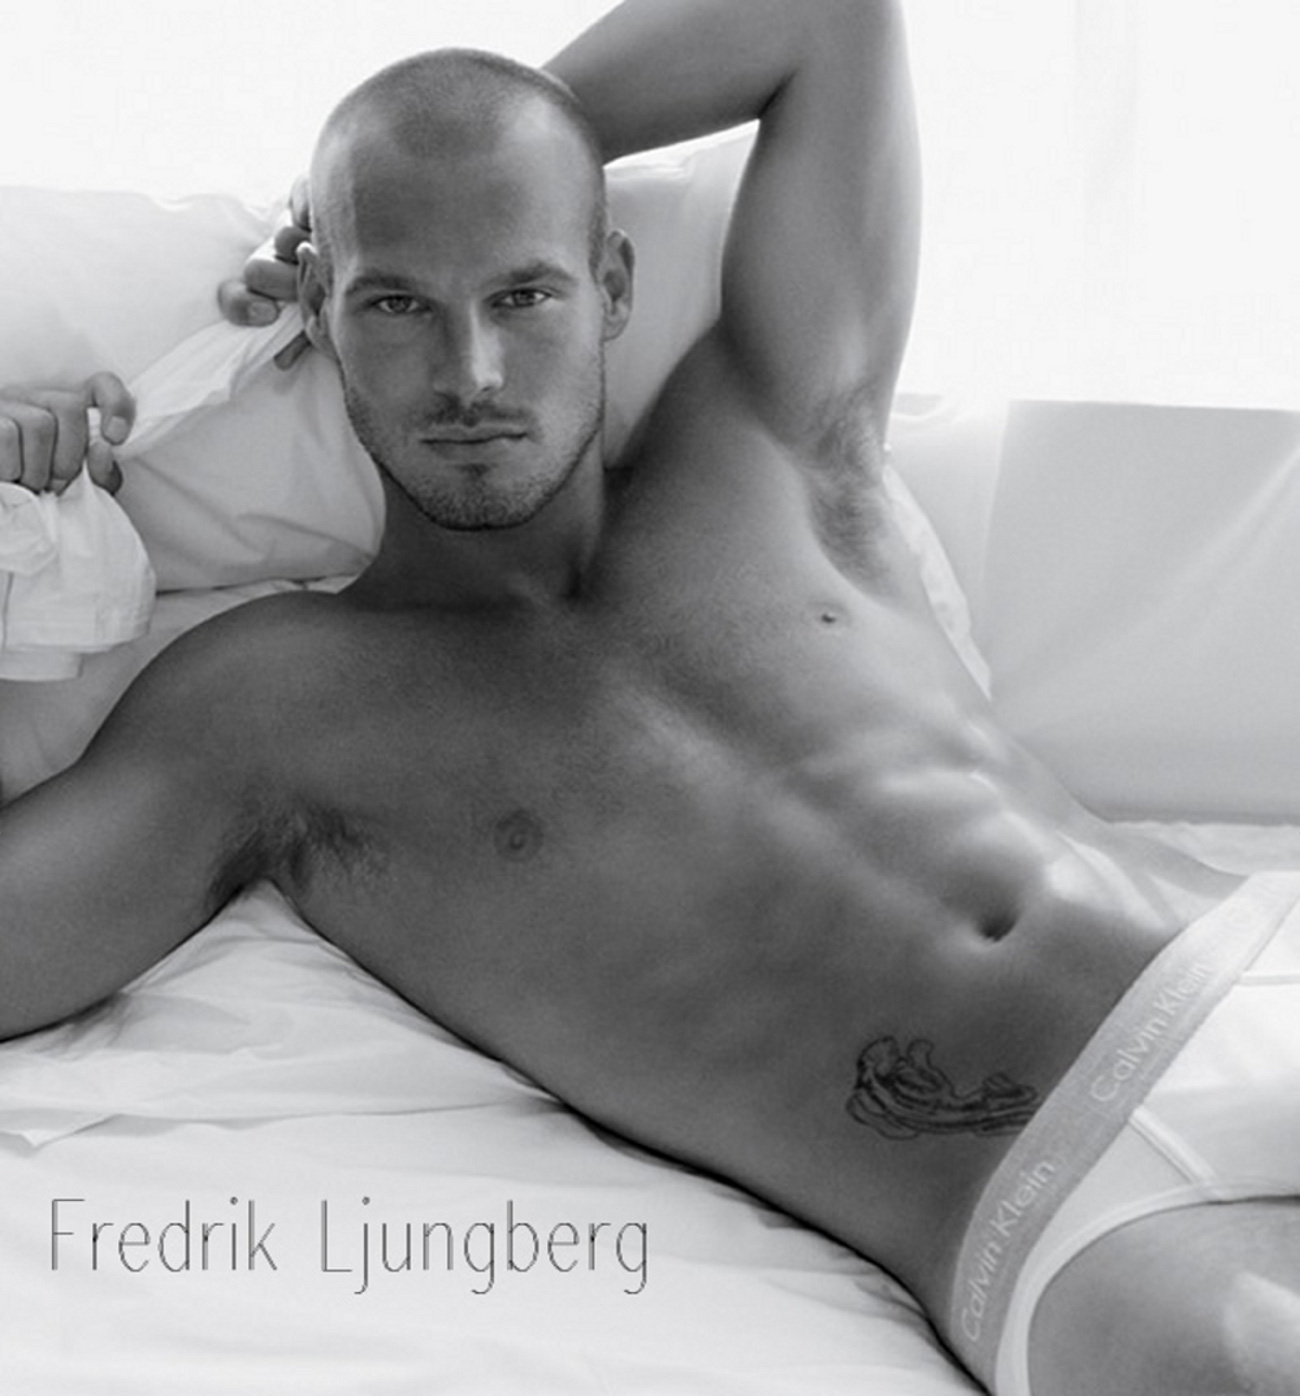 Fredrik Ljungberg, Sweden, 36